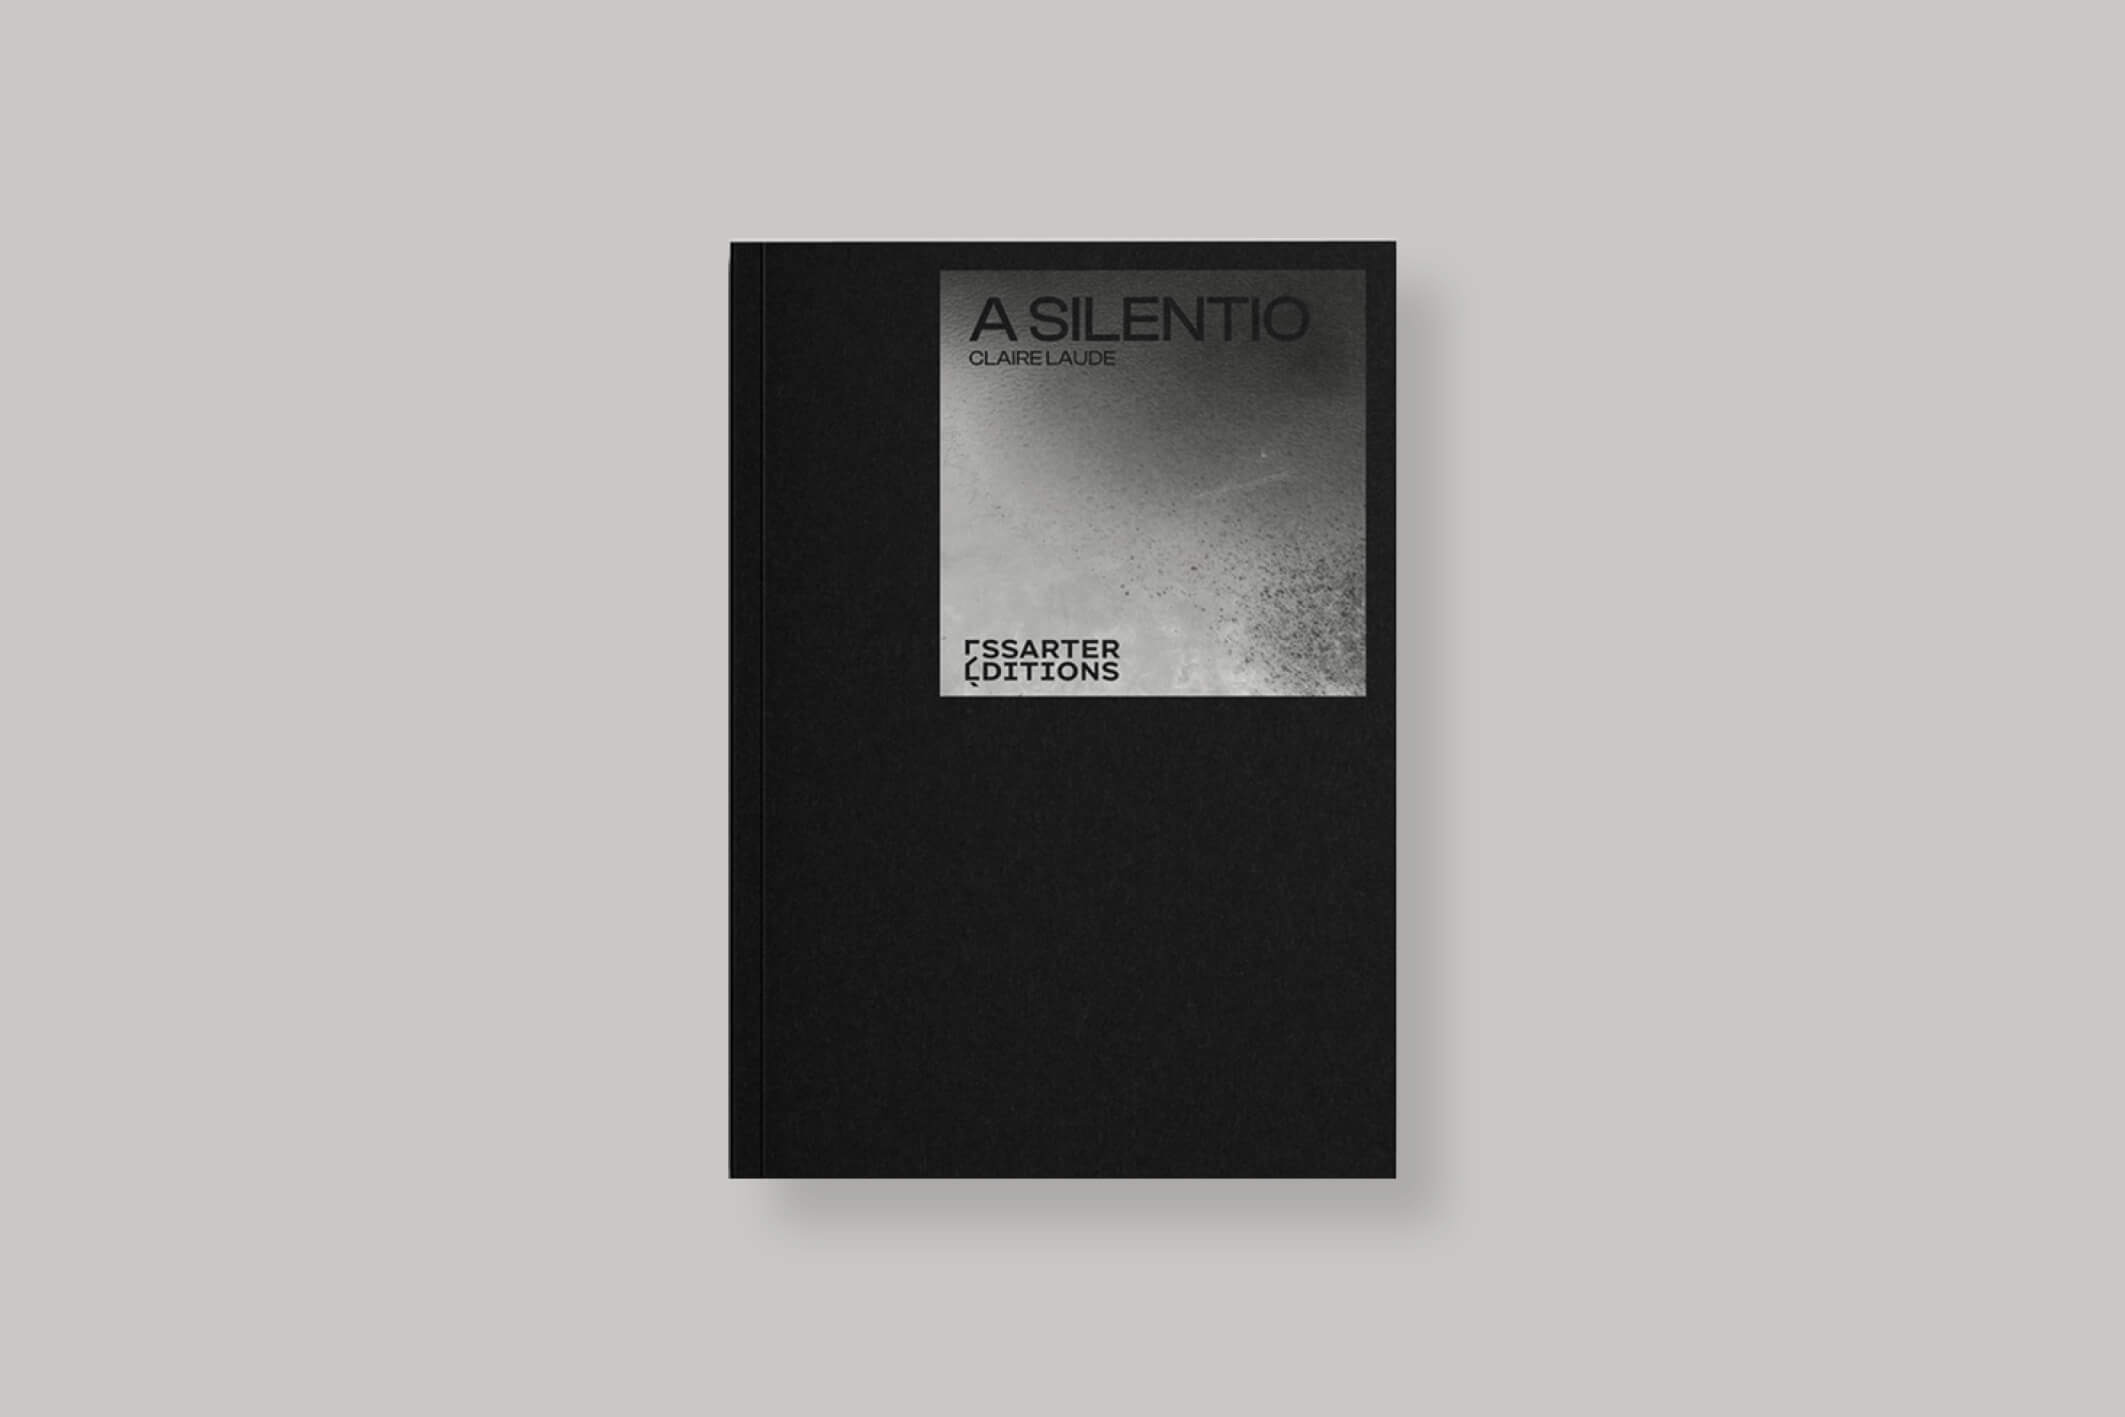 a-silentio-laude-essarter-editions-cover